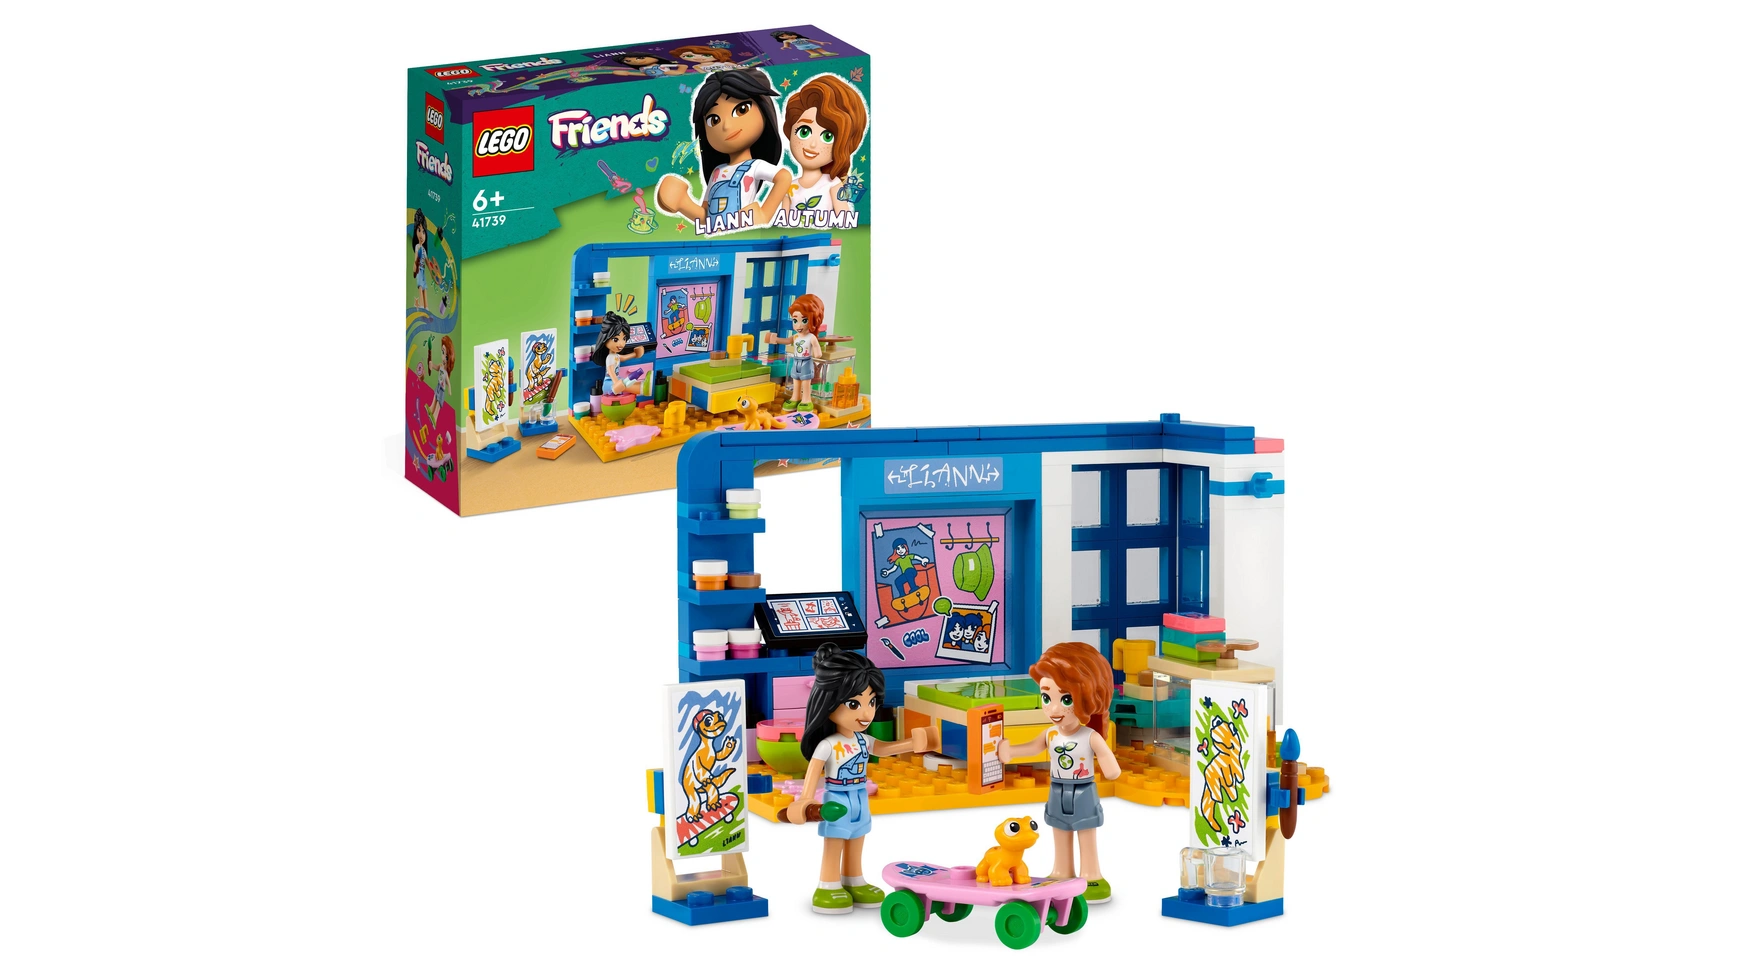 Lego Friends Комната Лианн, набор мини-куколок и игрушечных животных